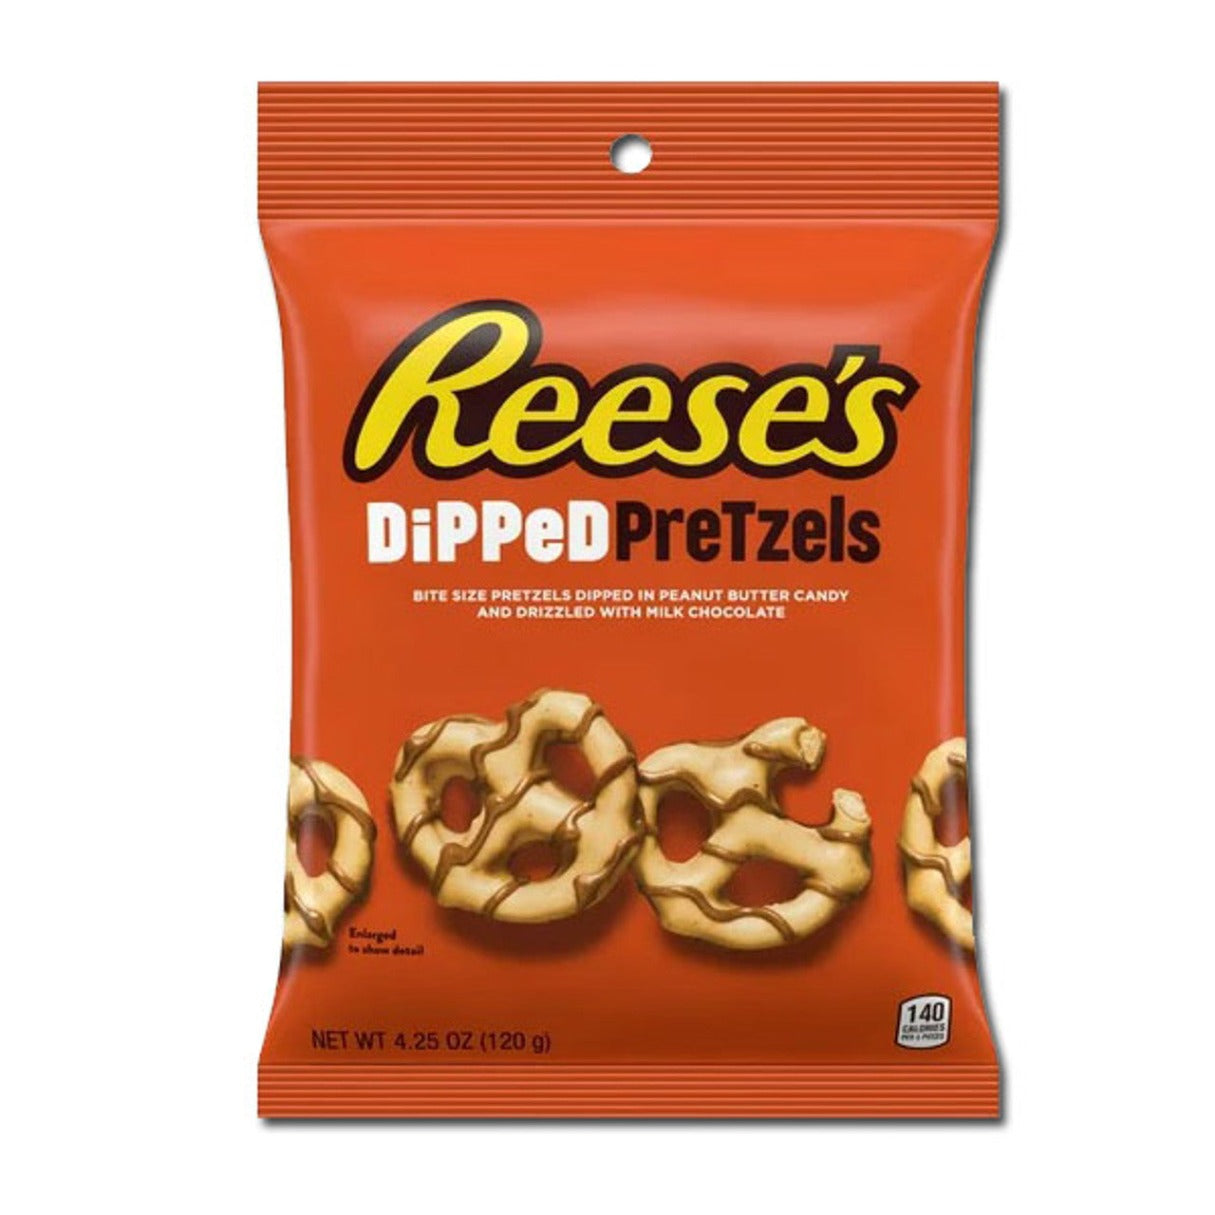 Reese's Dipped Pretzels 4.25oz - 12ct